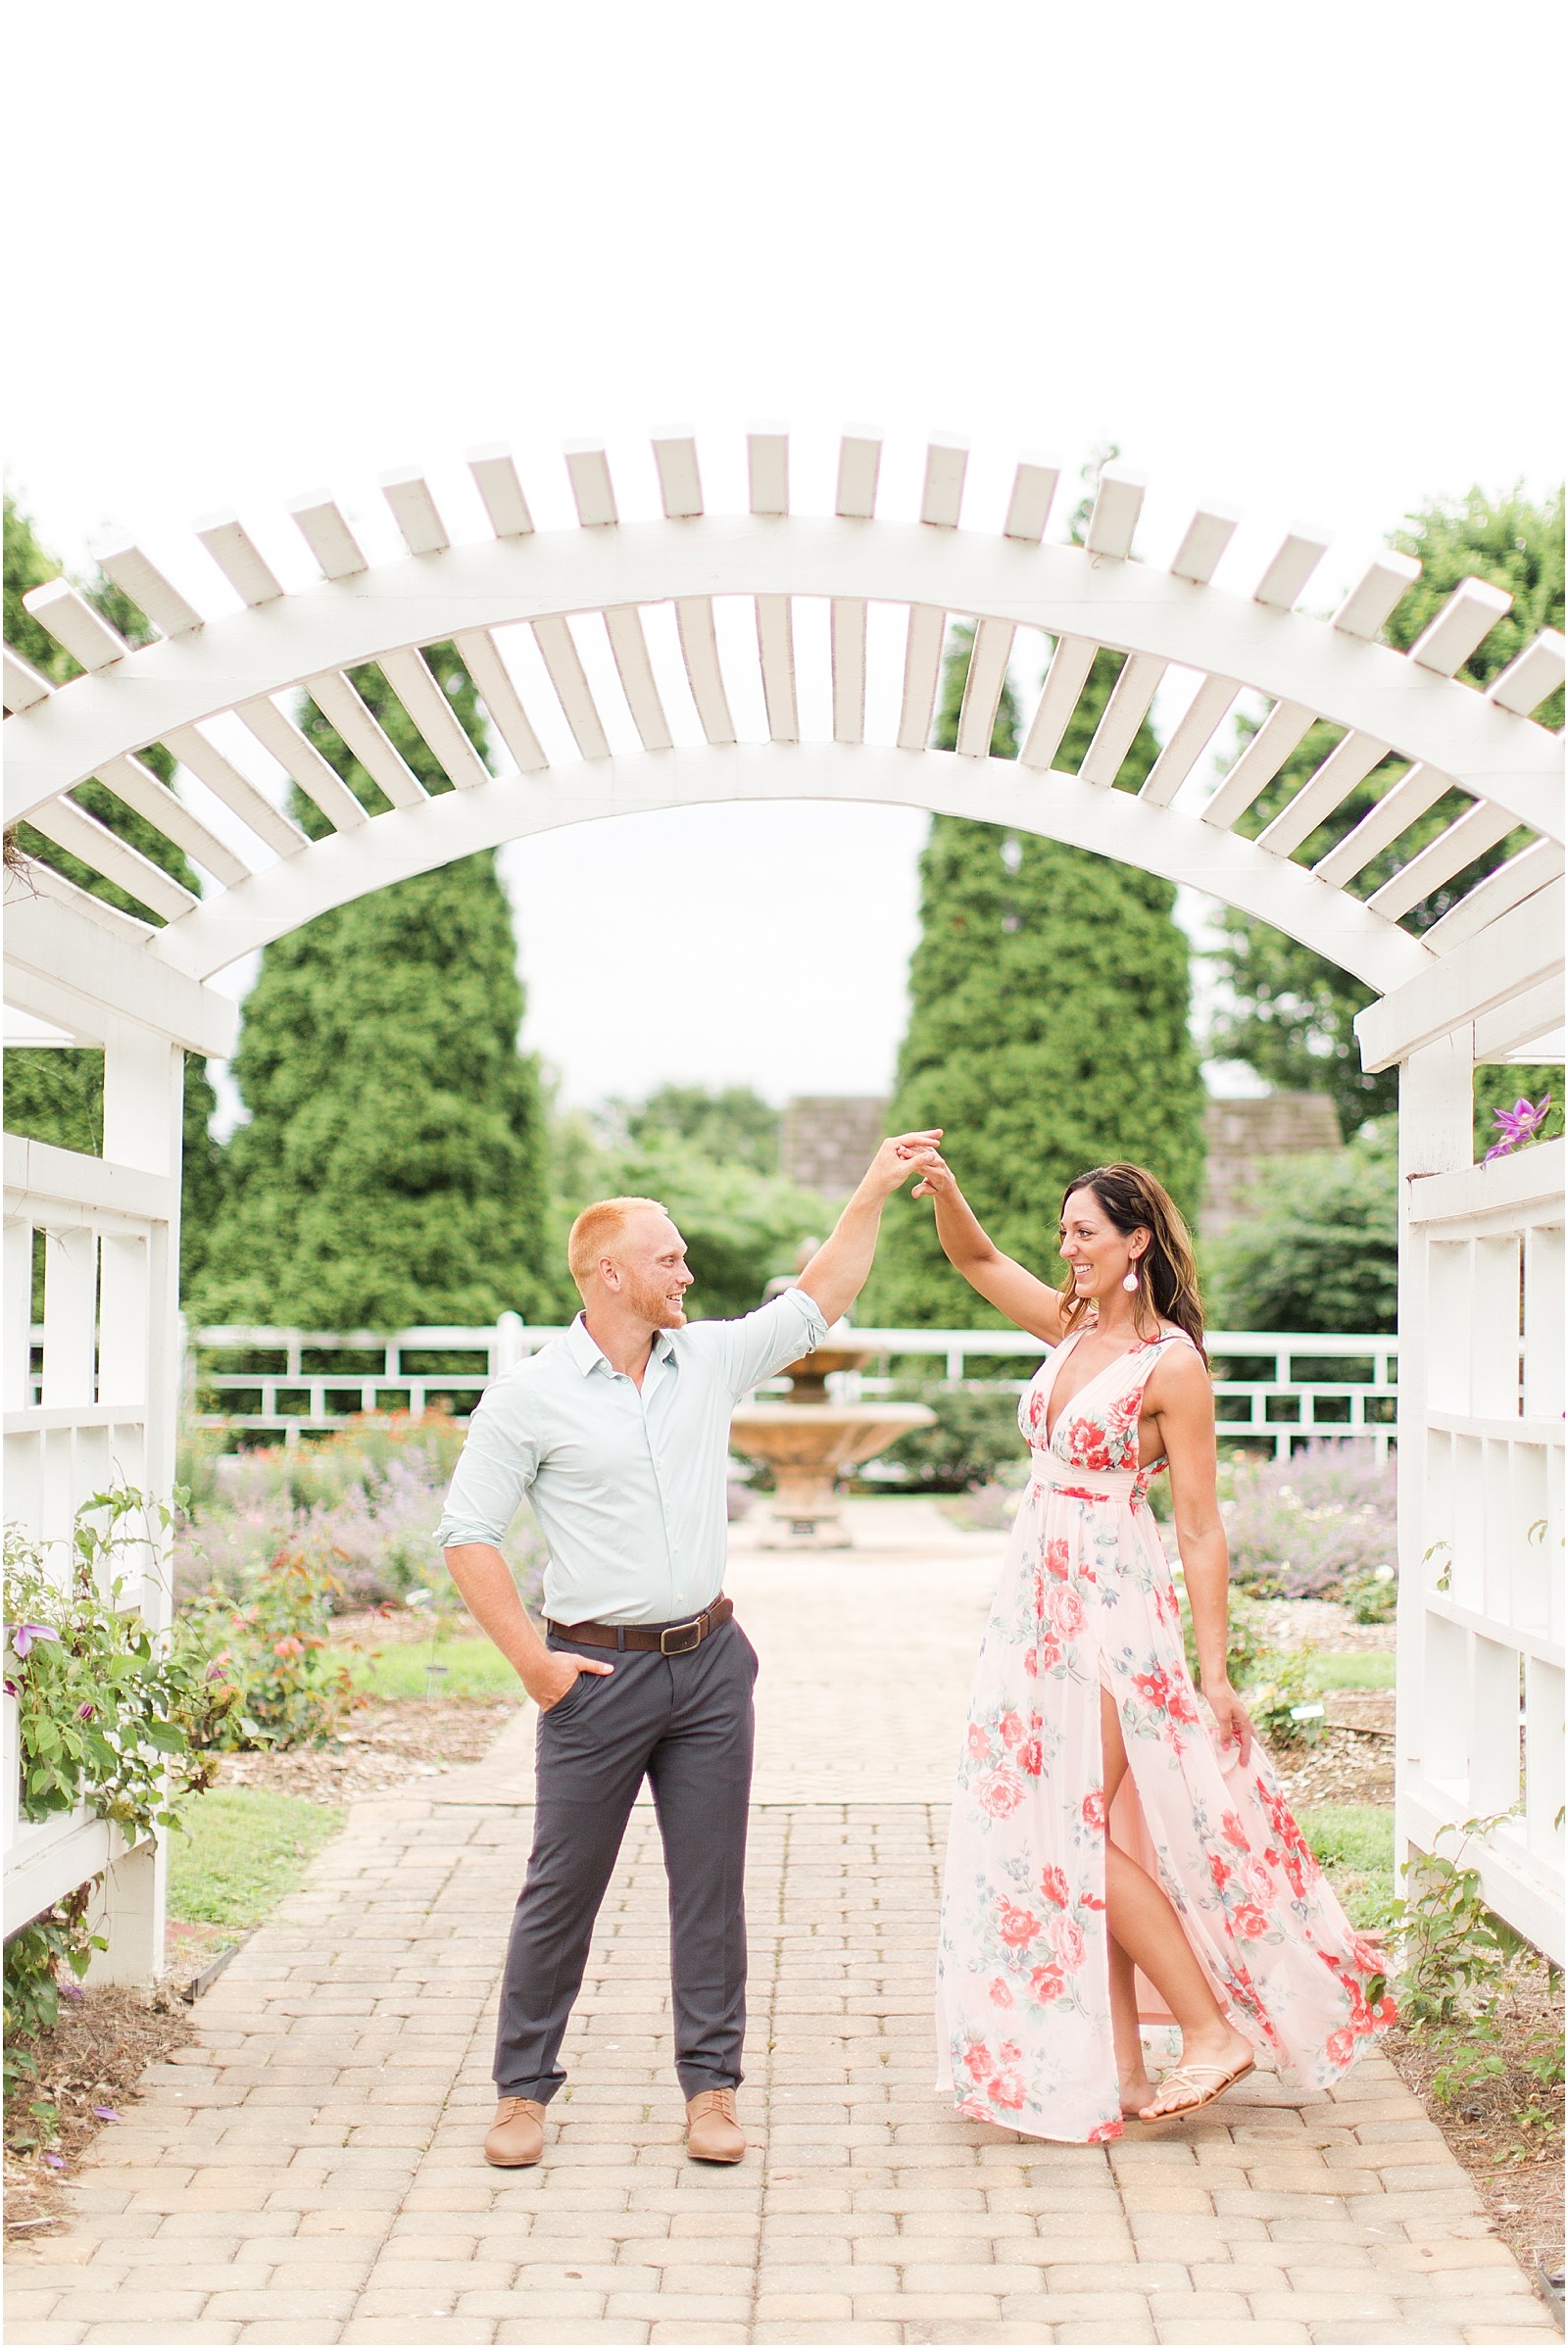 Western Kentuck Botanical Garden | Laura and Ryan | Bret and Branding Wedding Photograpers 011.jpg